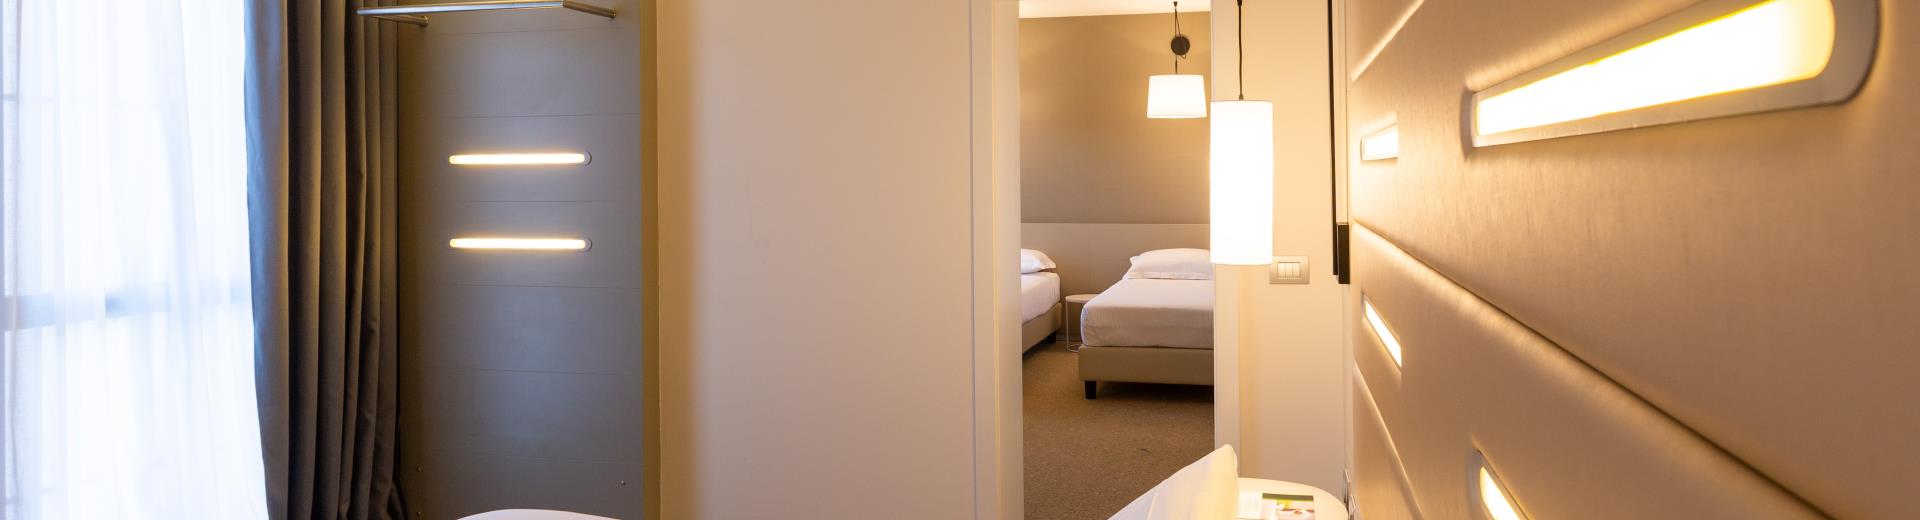 Standard Quadruple Room - Tower Hotel Bologna